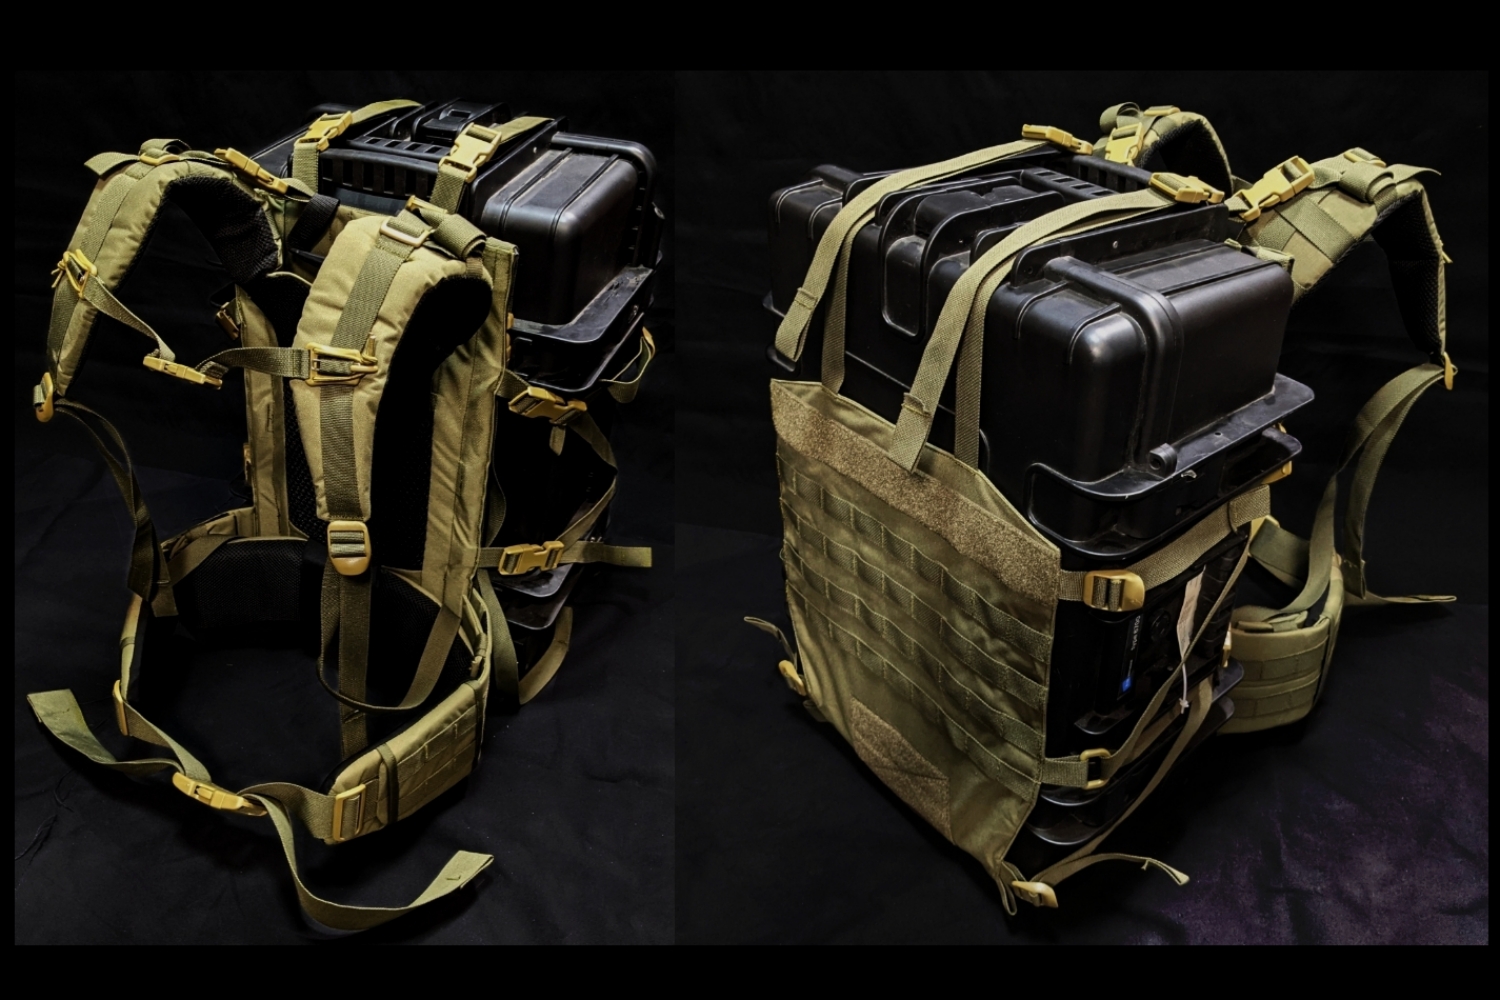 TTGD-Tactical Backpack Carrier